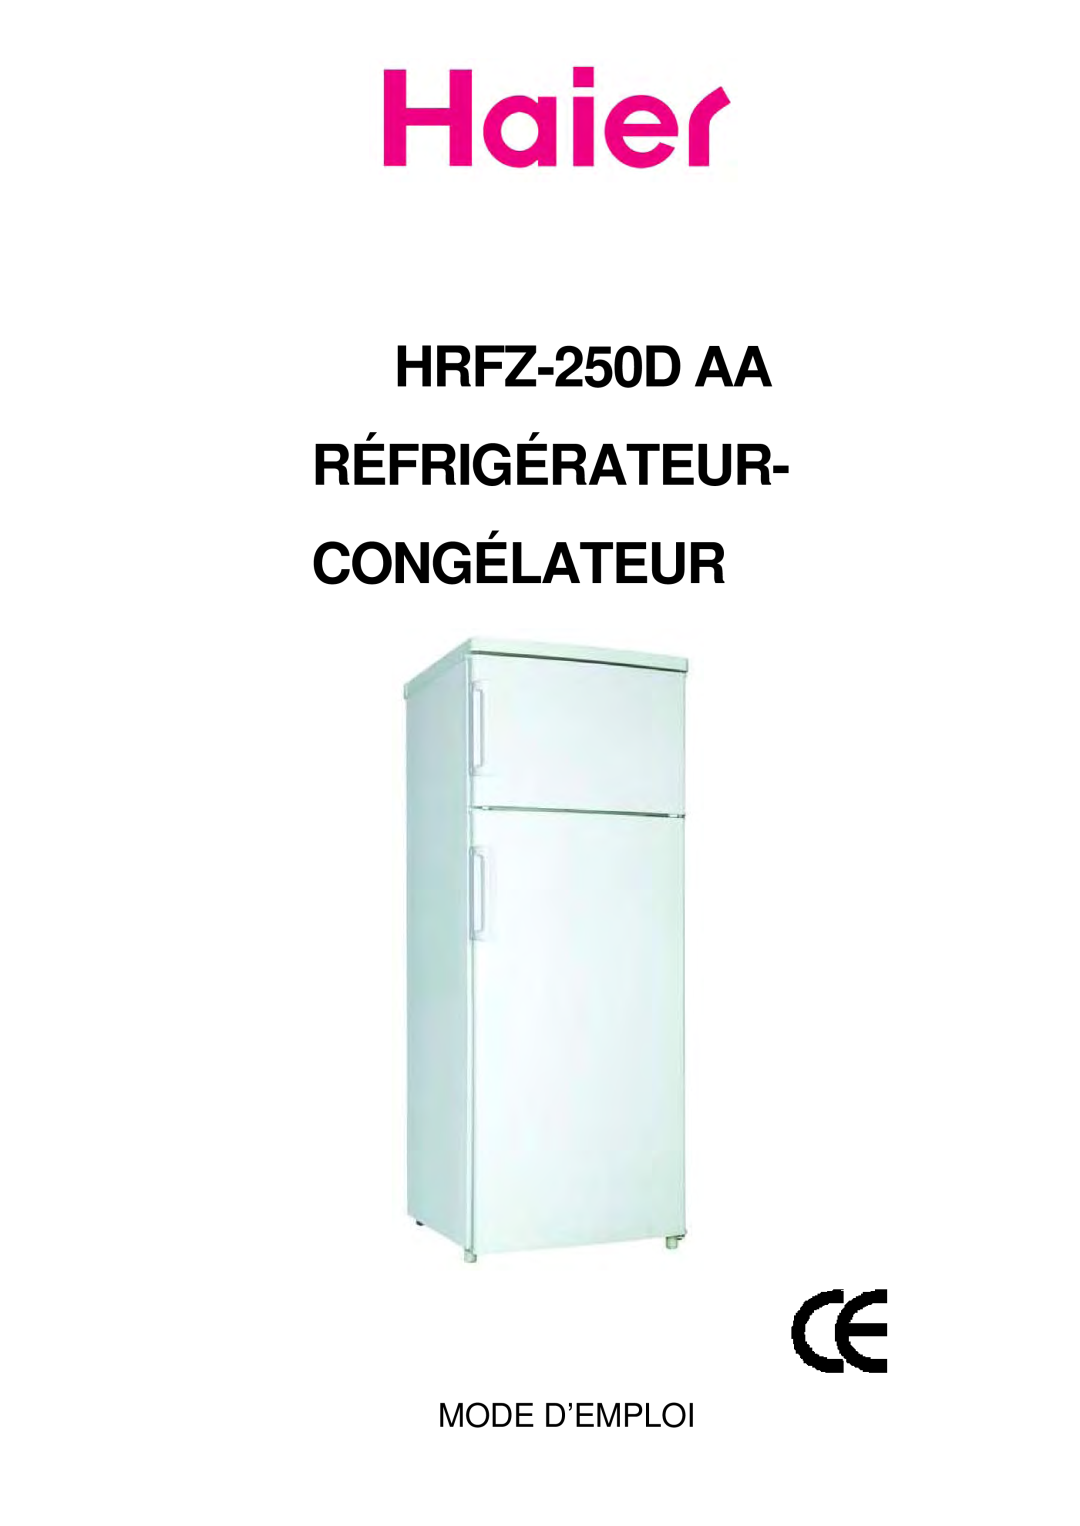 Haier HRFZ-250D AA manual HRFZ-250DAA RÉFRIGÉRATEUR- CONGÉLATEUR, Mode D’Emploi 